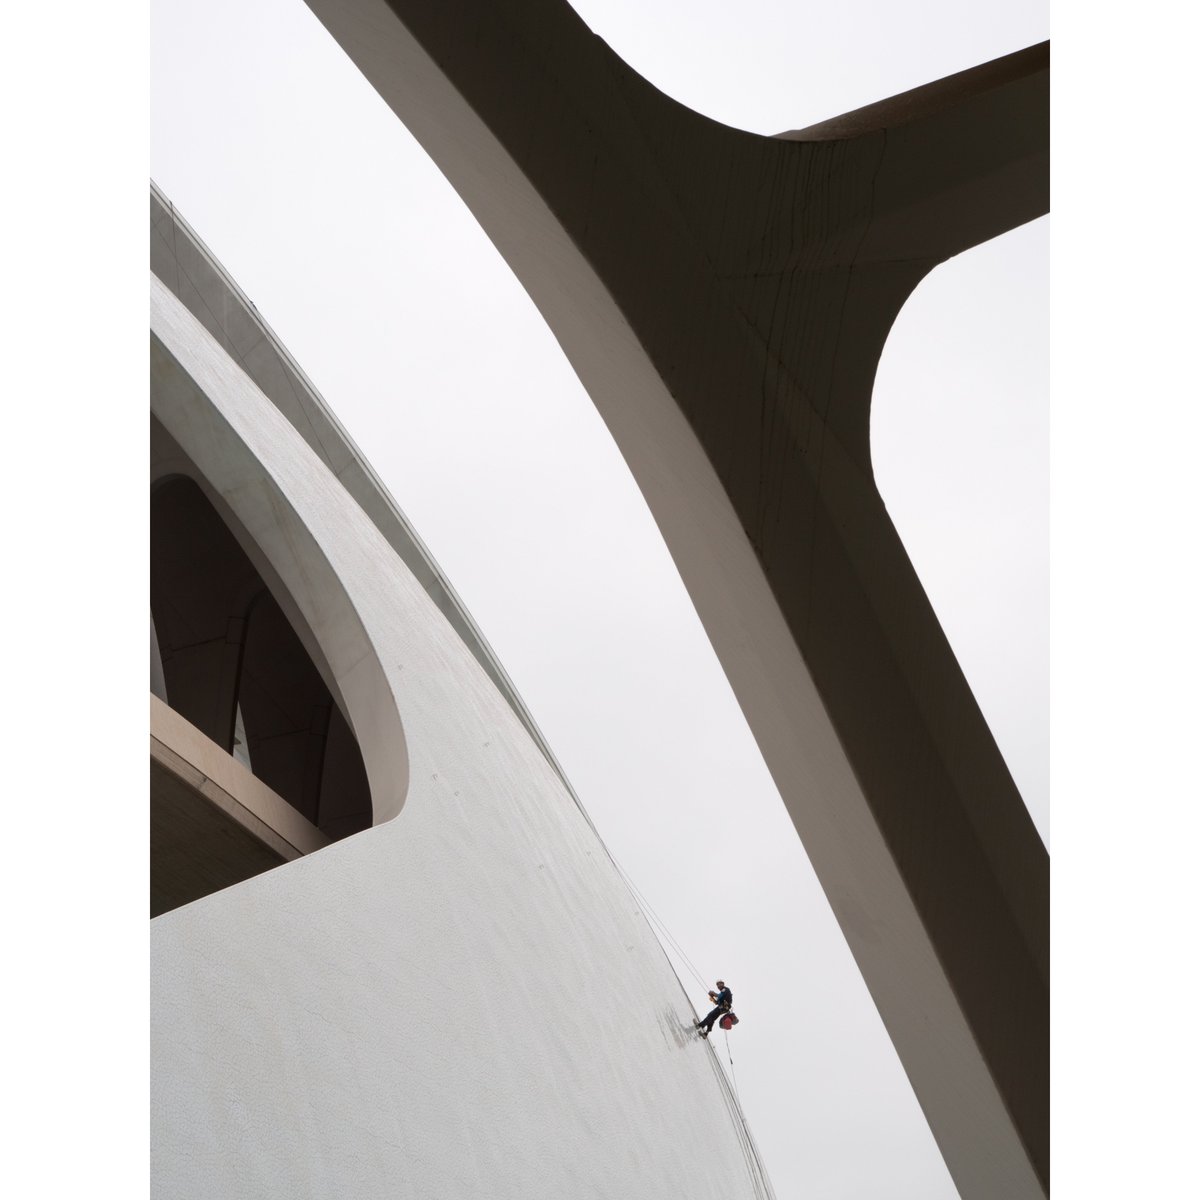 Palau de les arts, Valencia (Spain)

#valencia #spain #españa #ciudadartesciencias #highwork #alone #working #worker #minimal #minimalism #minimalistic #geometry #geometric #diagonal #contrast #architecture #modernarchitecture #urbanphotography #arquitectura #gx8 #nocticron